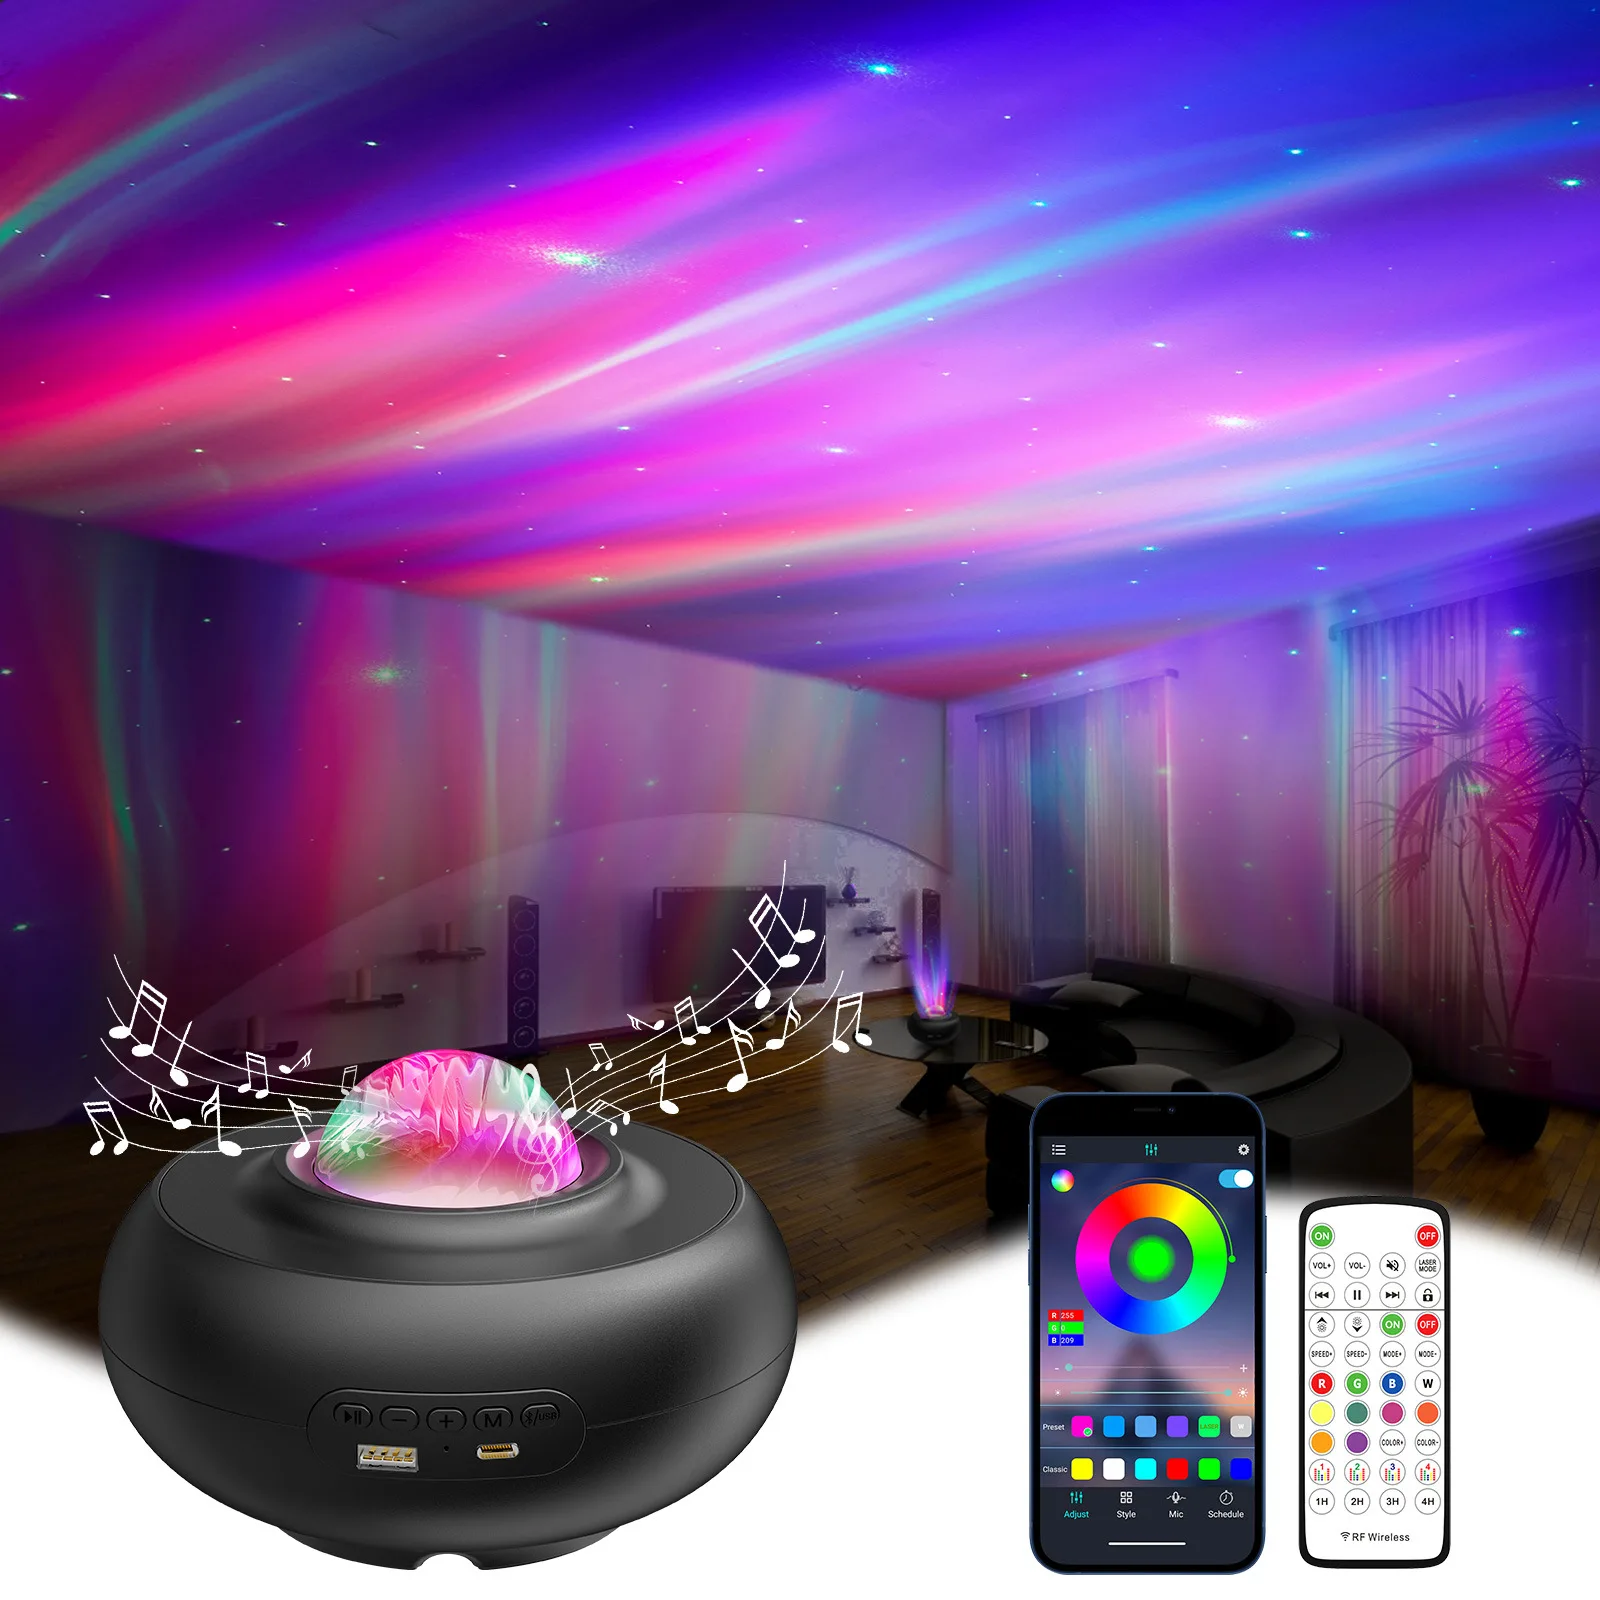 Diamond LED Night Light Realistic Aurora Borealis Projector Sleep Aid Xmas Gift 